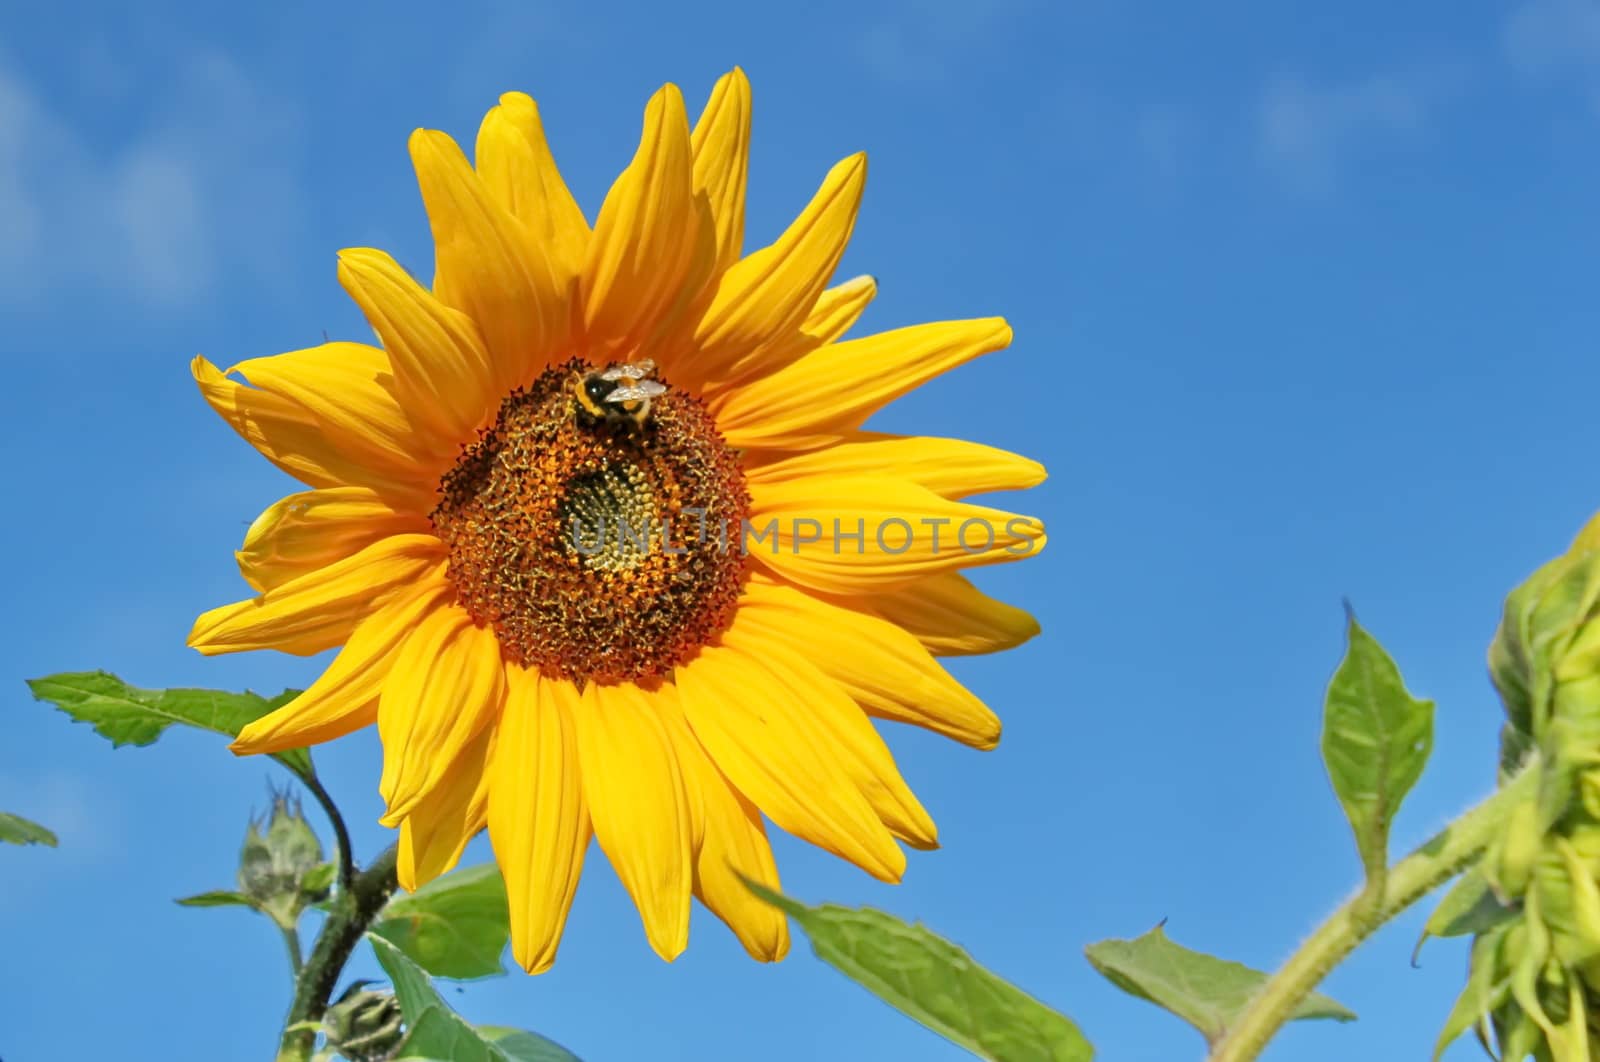 One beautiful sunflower in deep blue sky